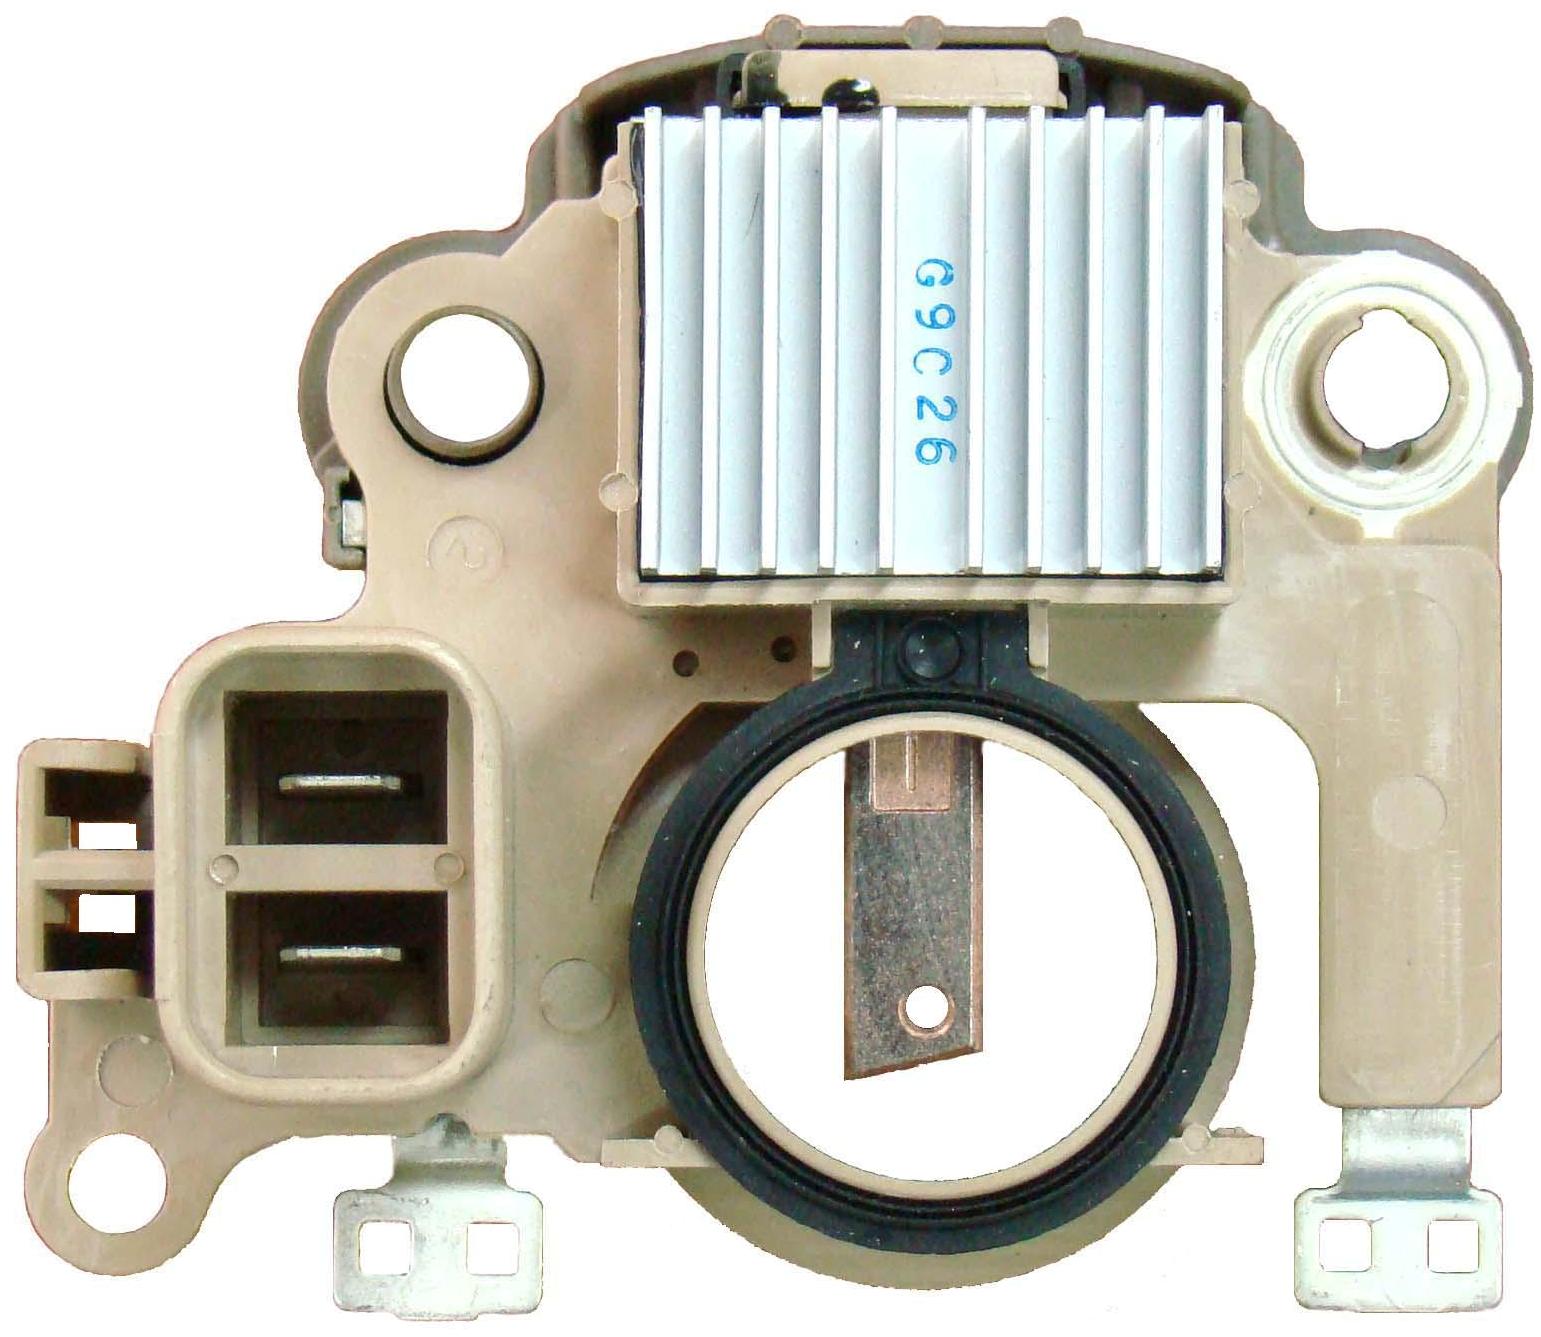 Voltage Regulator for Automobile(GNR-M012)